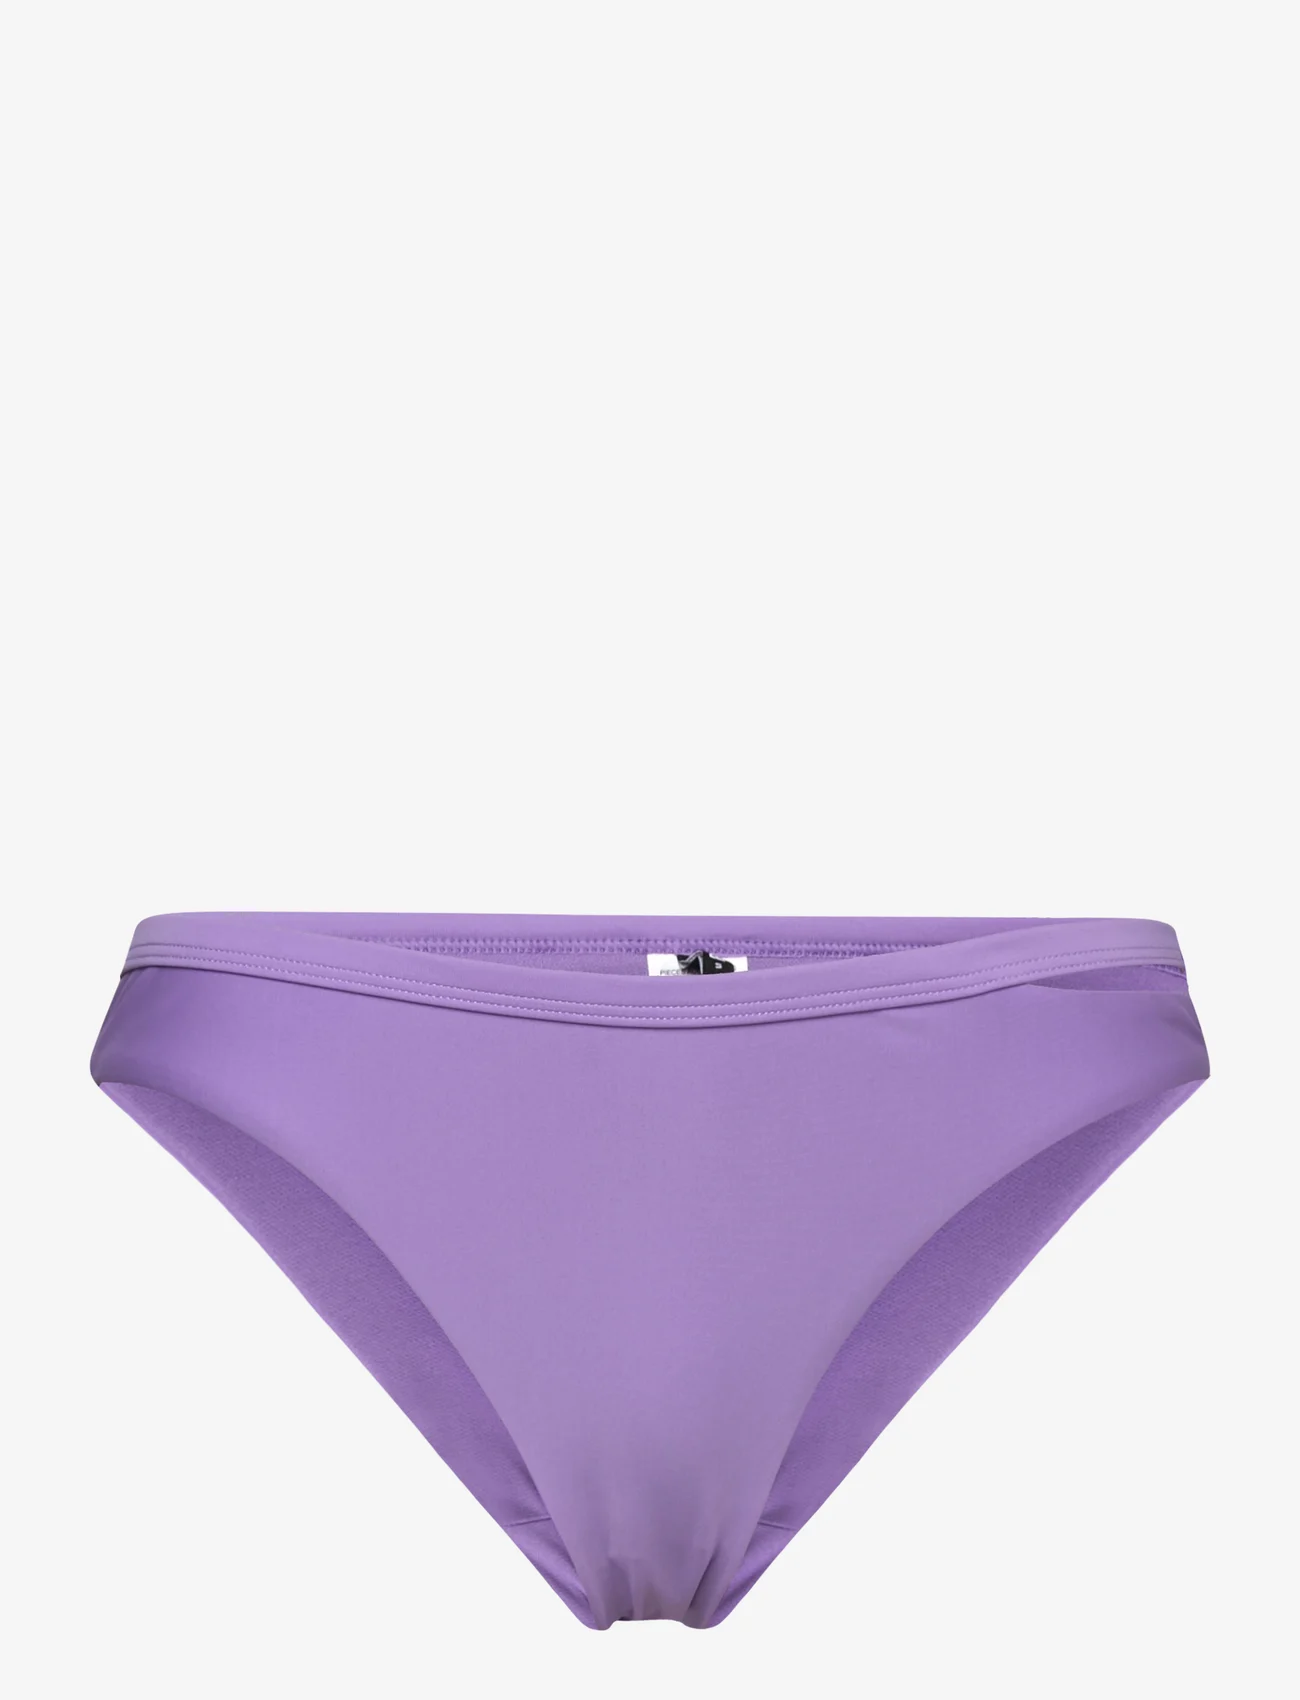 Pieces - PCBARA BIKINI CUT OUT BRAZIL SWW BC - bikini briefs - paisley purple - 0